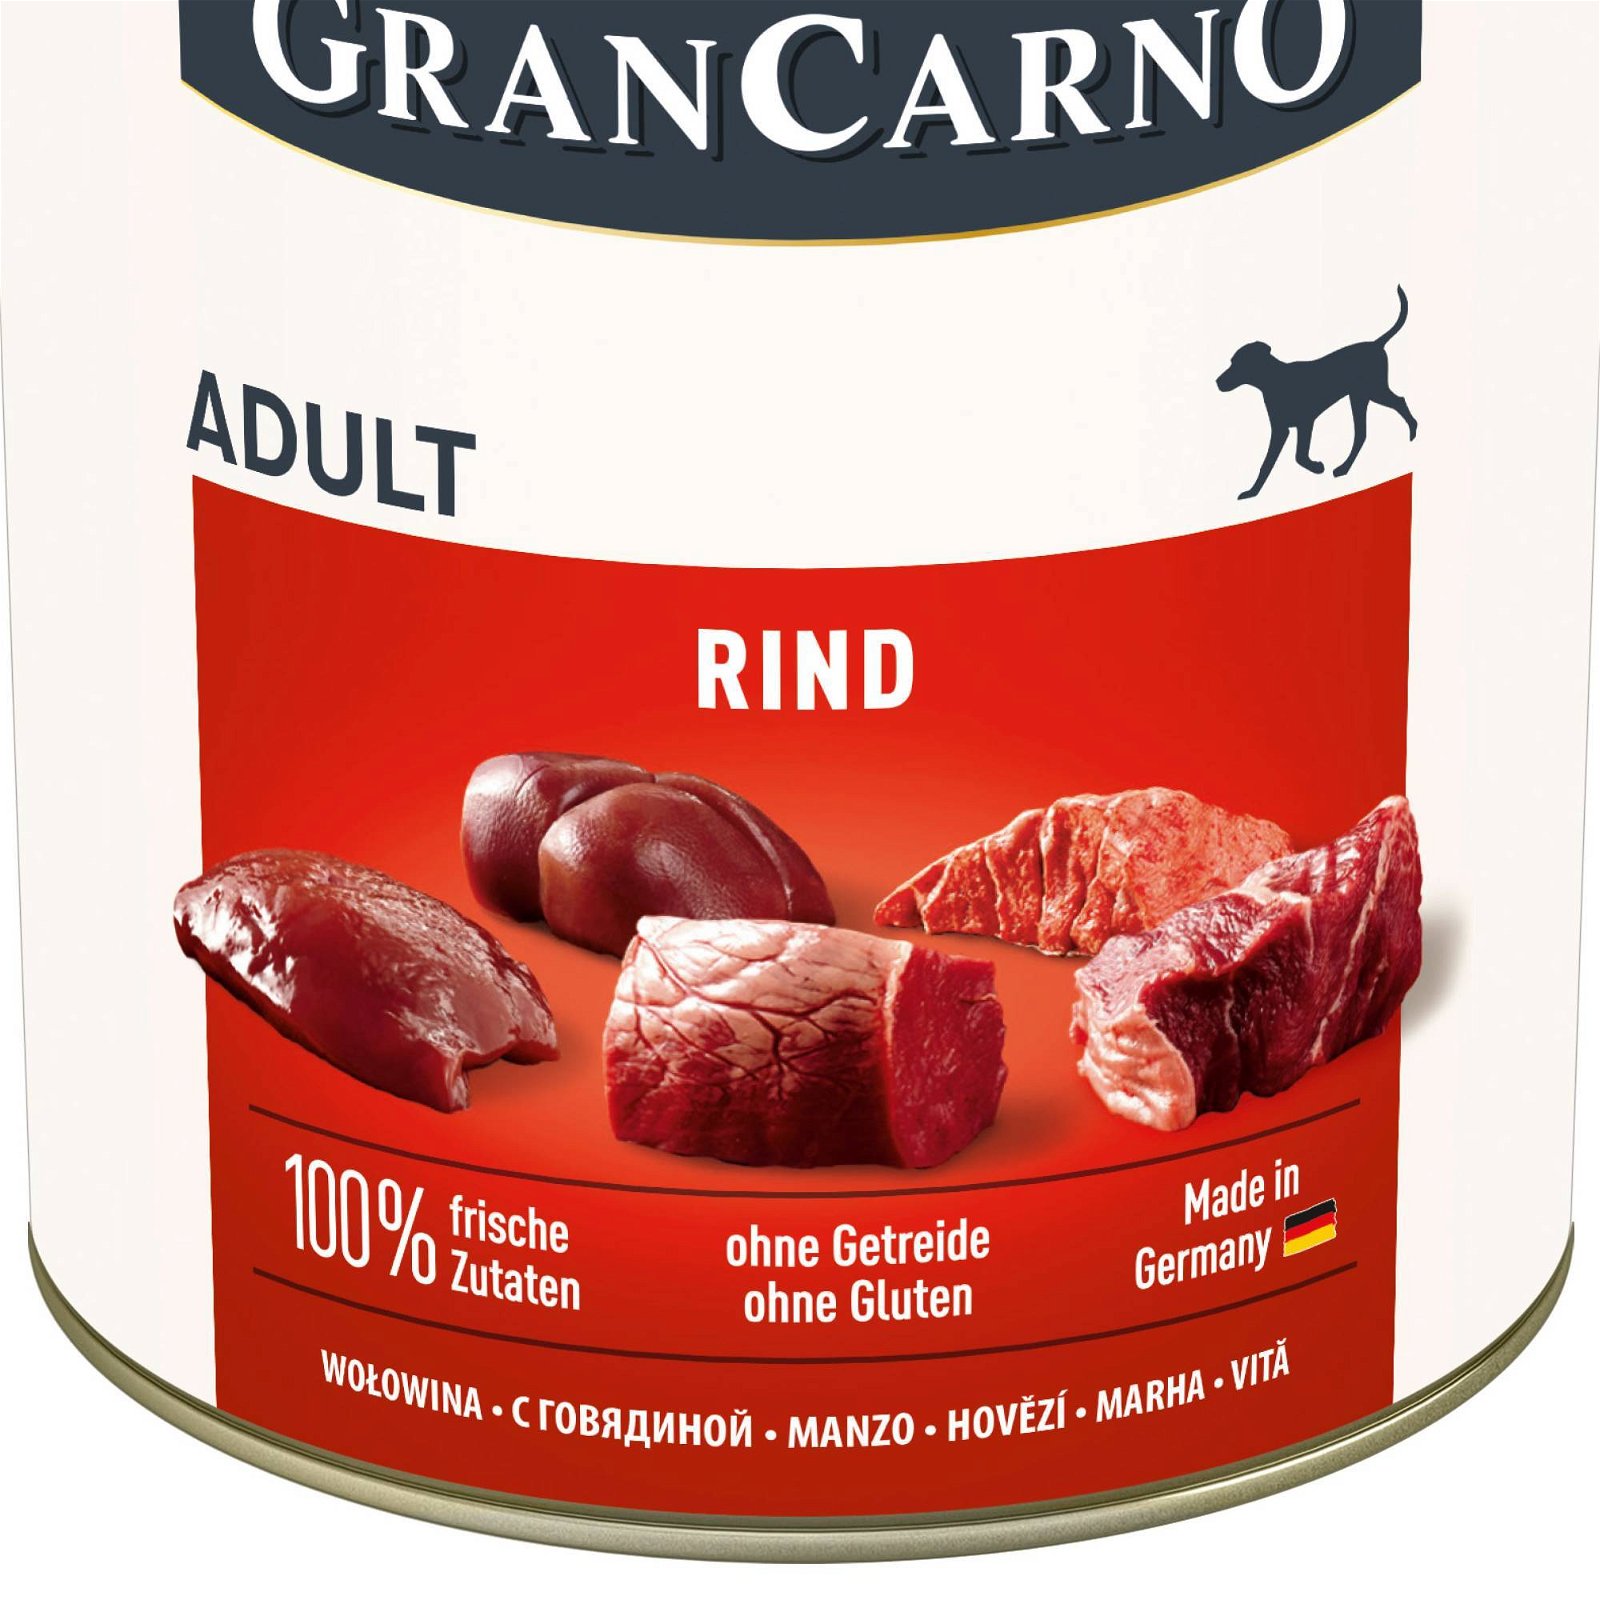 Hundefutter 'Animonda Cran Carno ® Adult', Rindfleisch pur